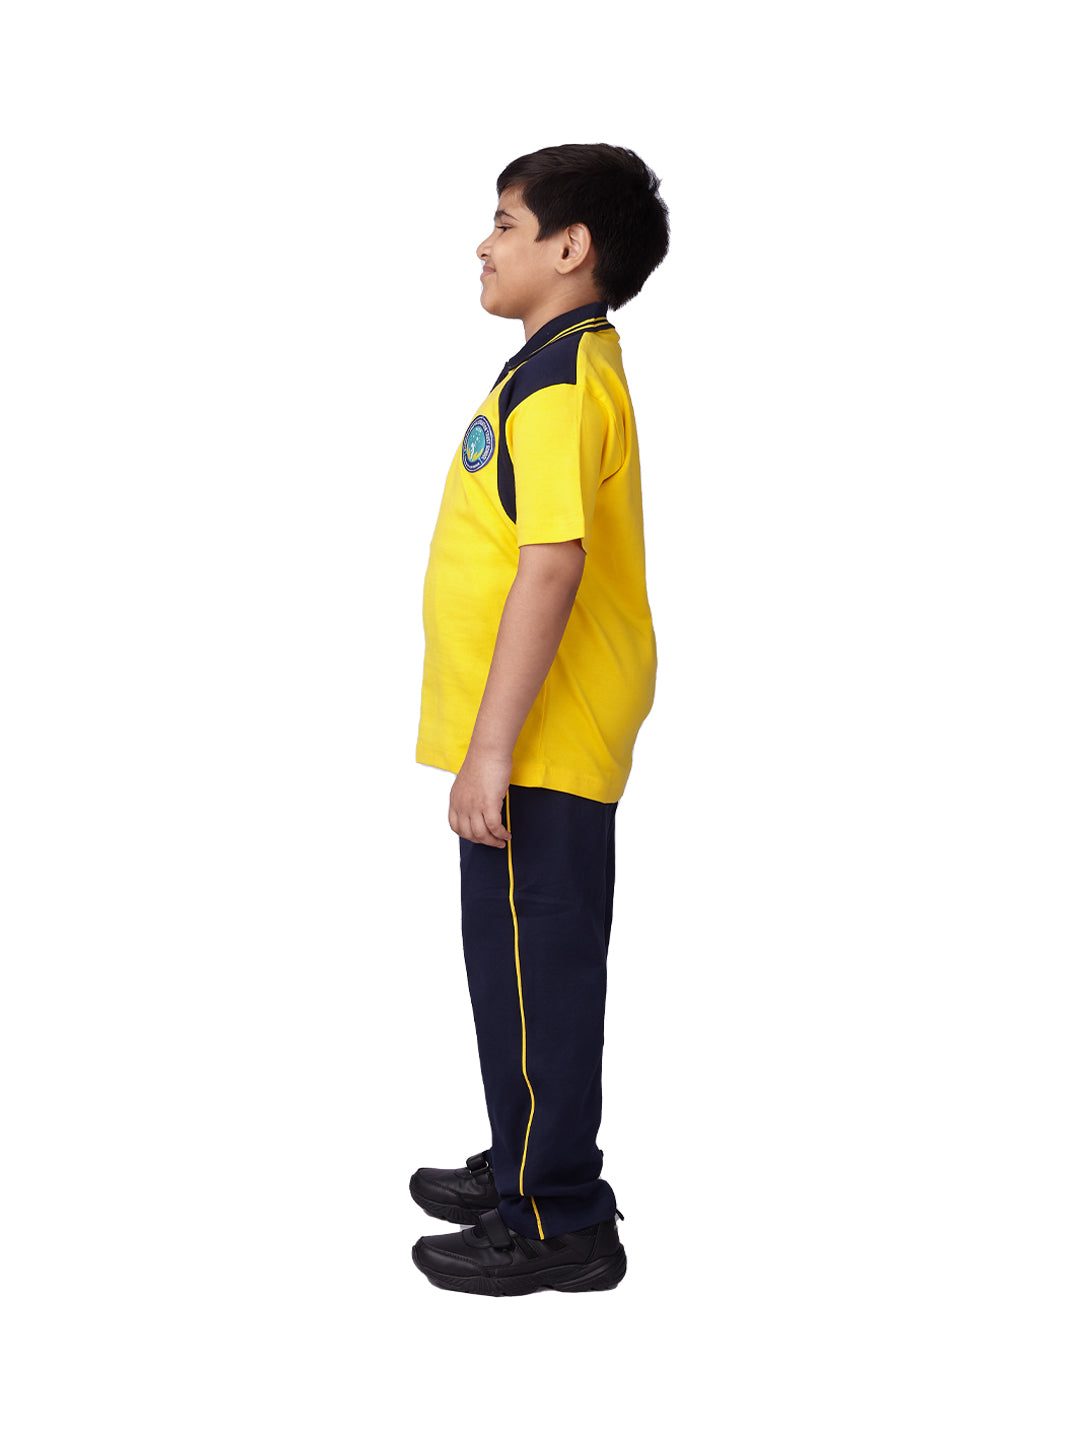 Maneckji Primary Yellow PT Uniform